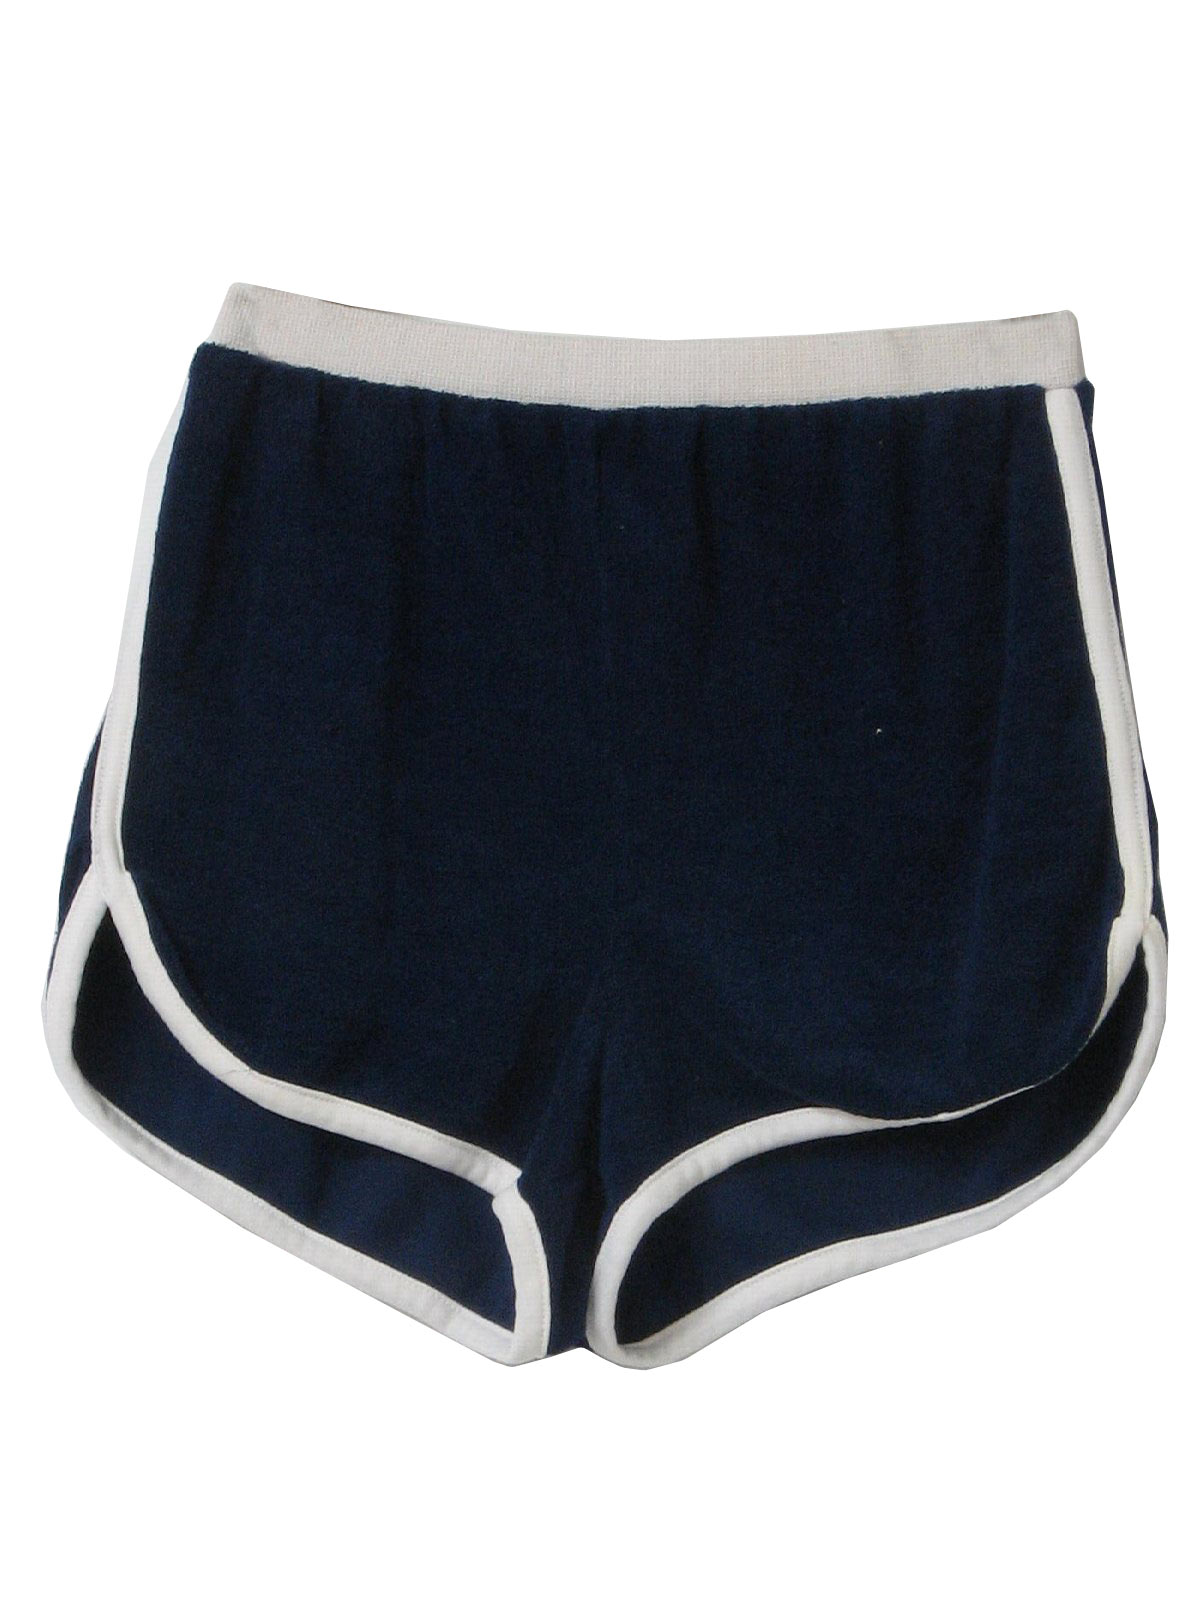 Retro 1980's Shorts (LeVoys) : 80s -LeVoys- Mens midnight blue ...